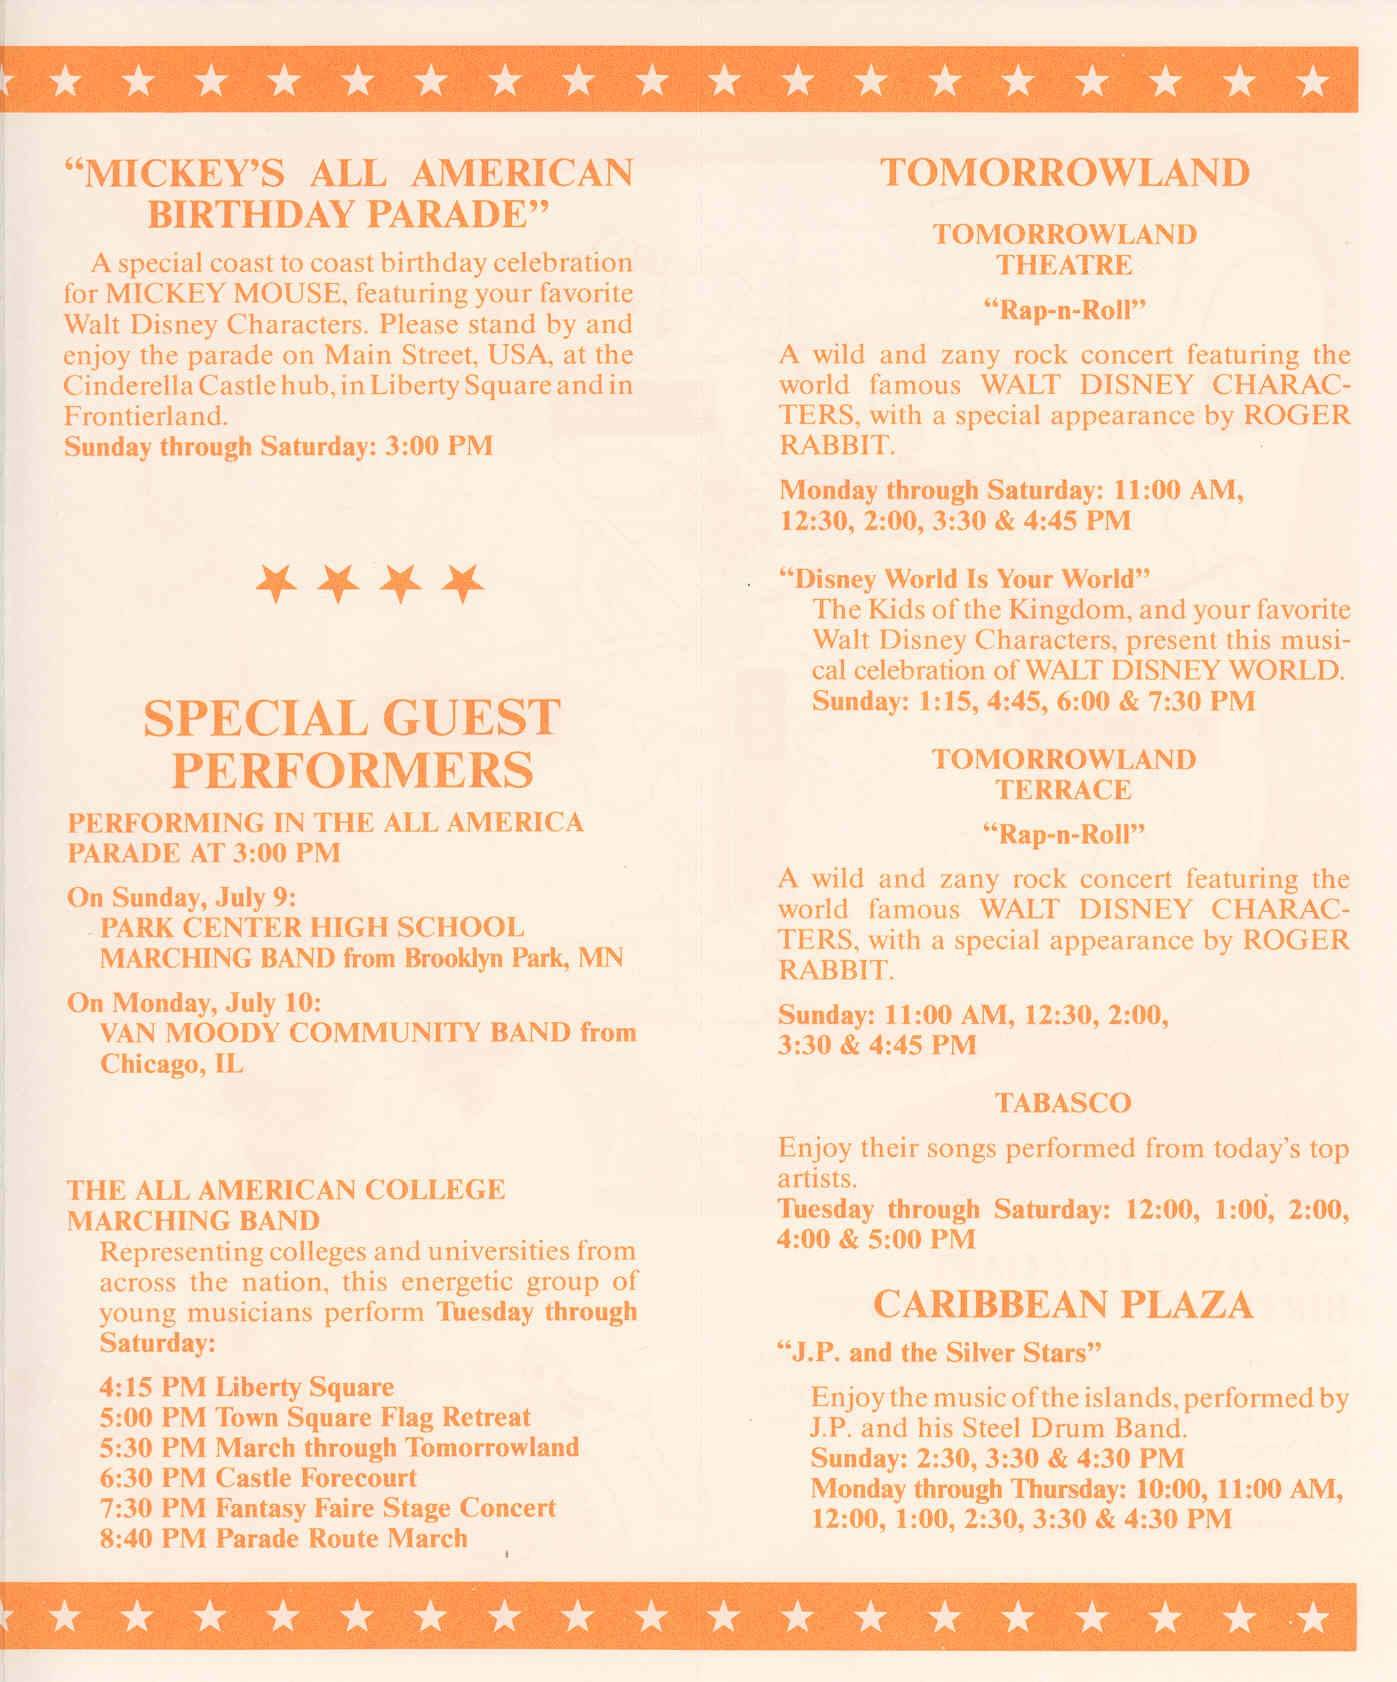 Magic Kingdom Show Guide 1989